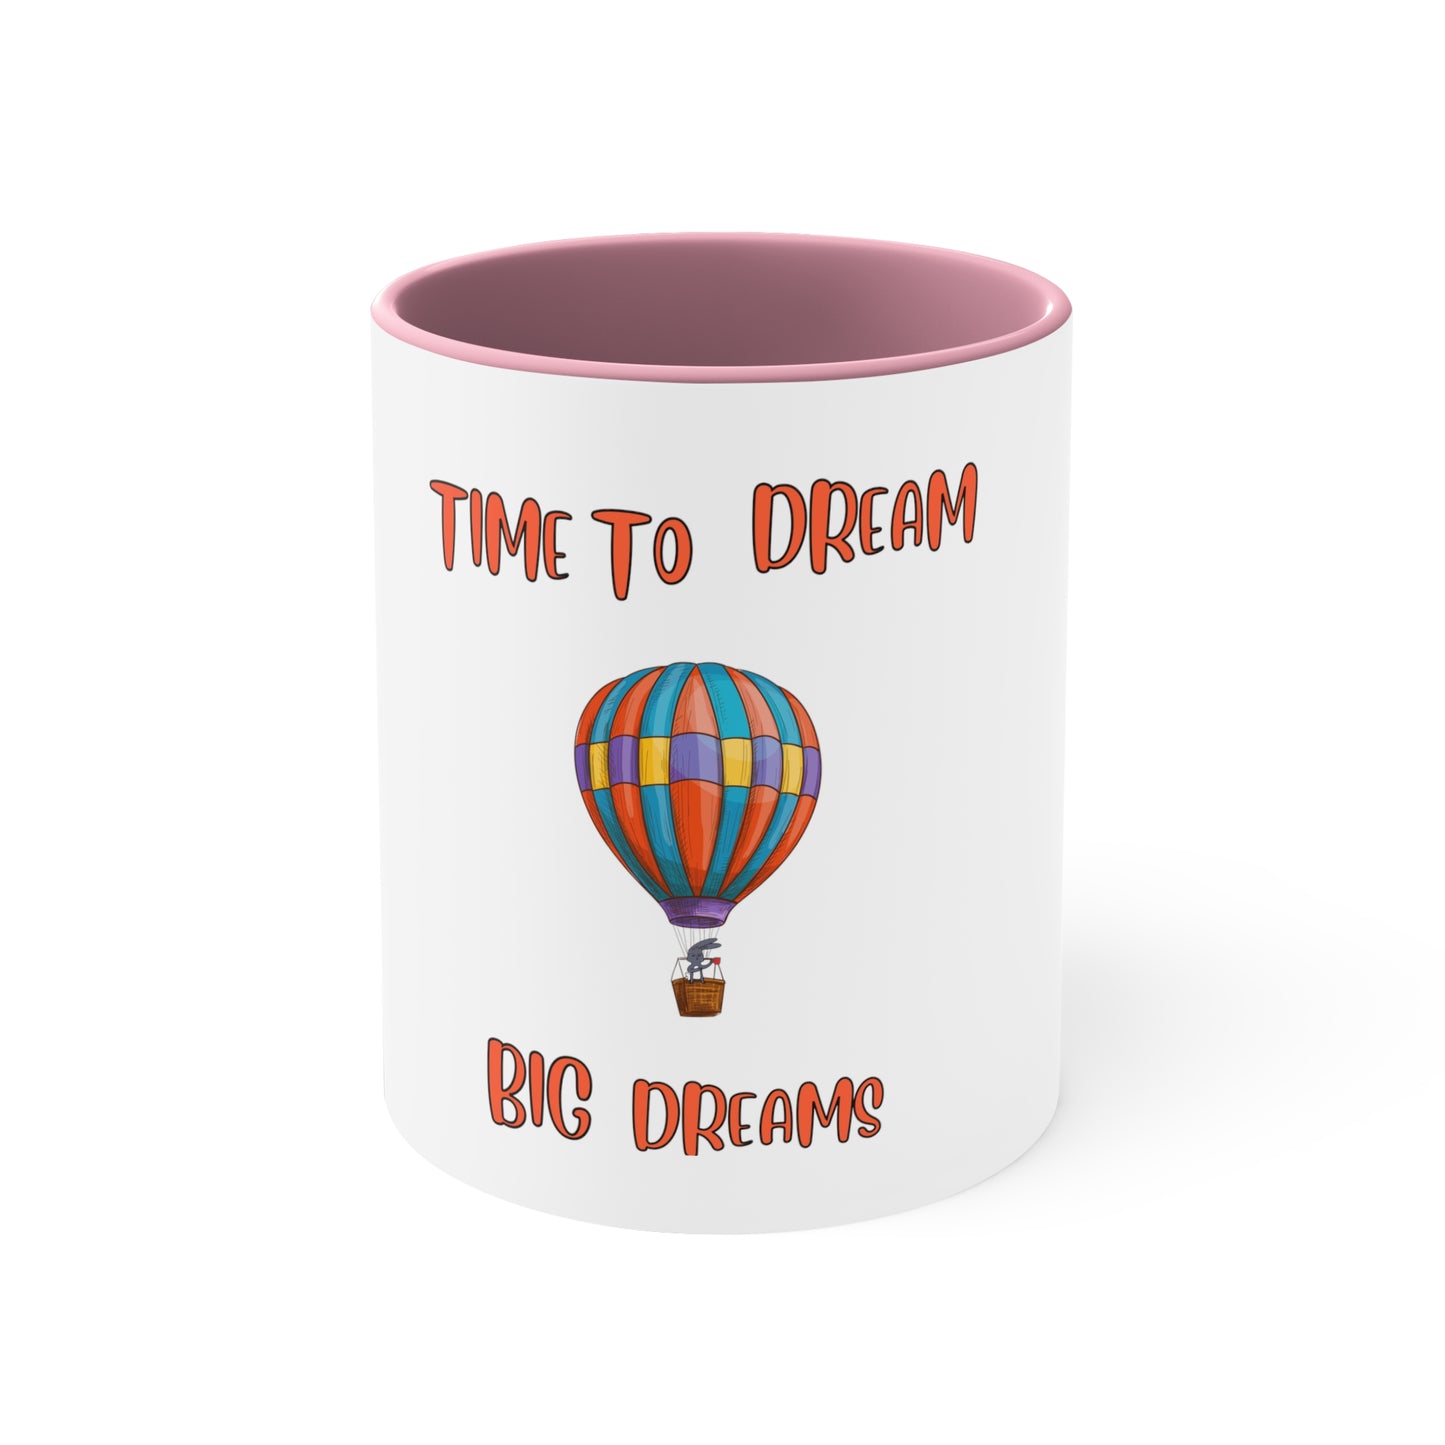 Time To Dream Big Dreams. Bunny. Coffee Mug